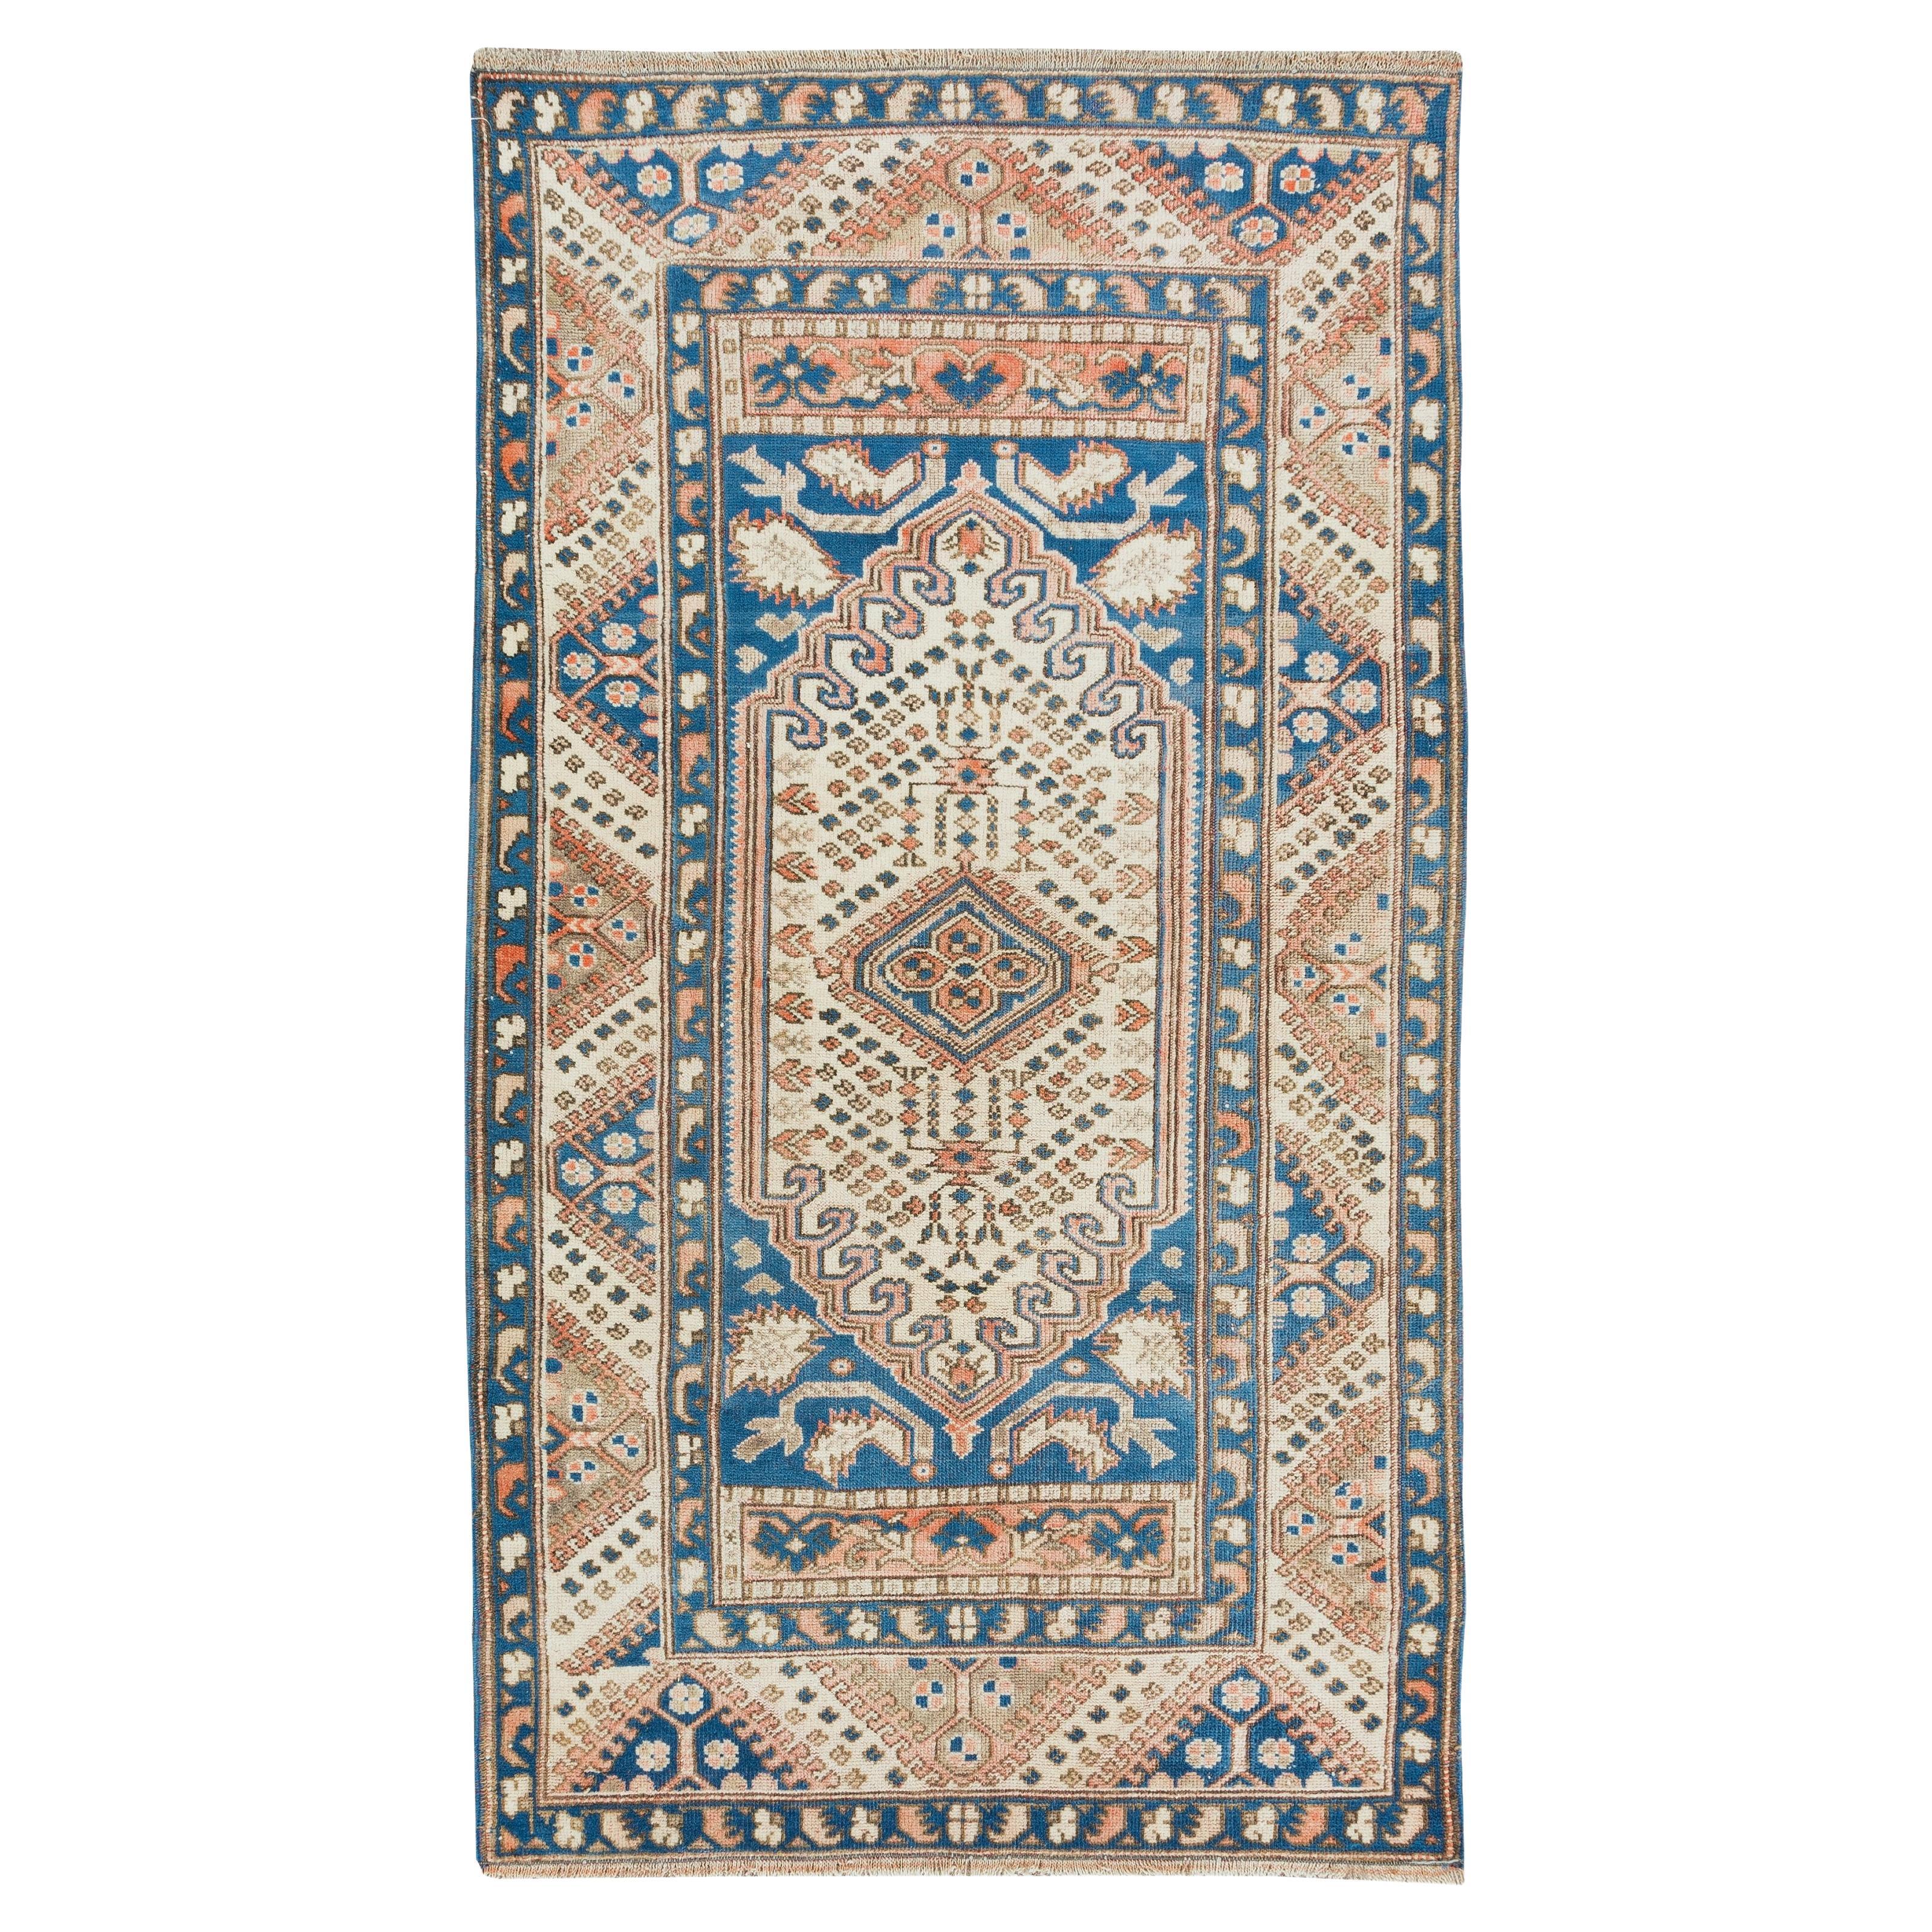 3.4x6.3 Ft Traditional Geometric Turkish Accent Rug. Vintage Handmade Carpet